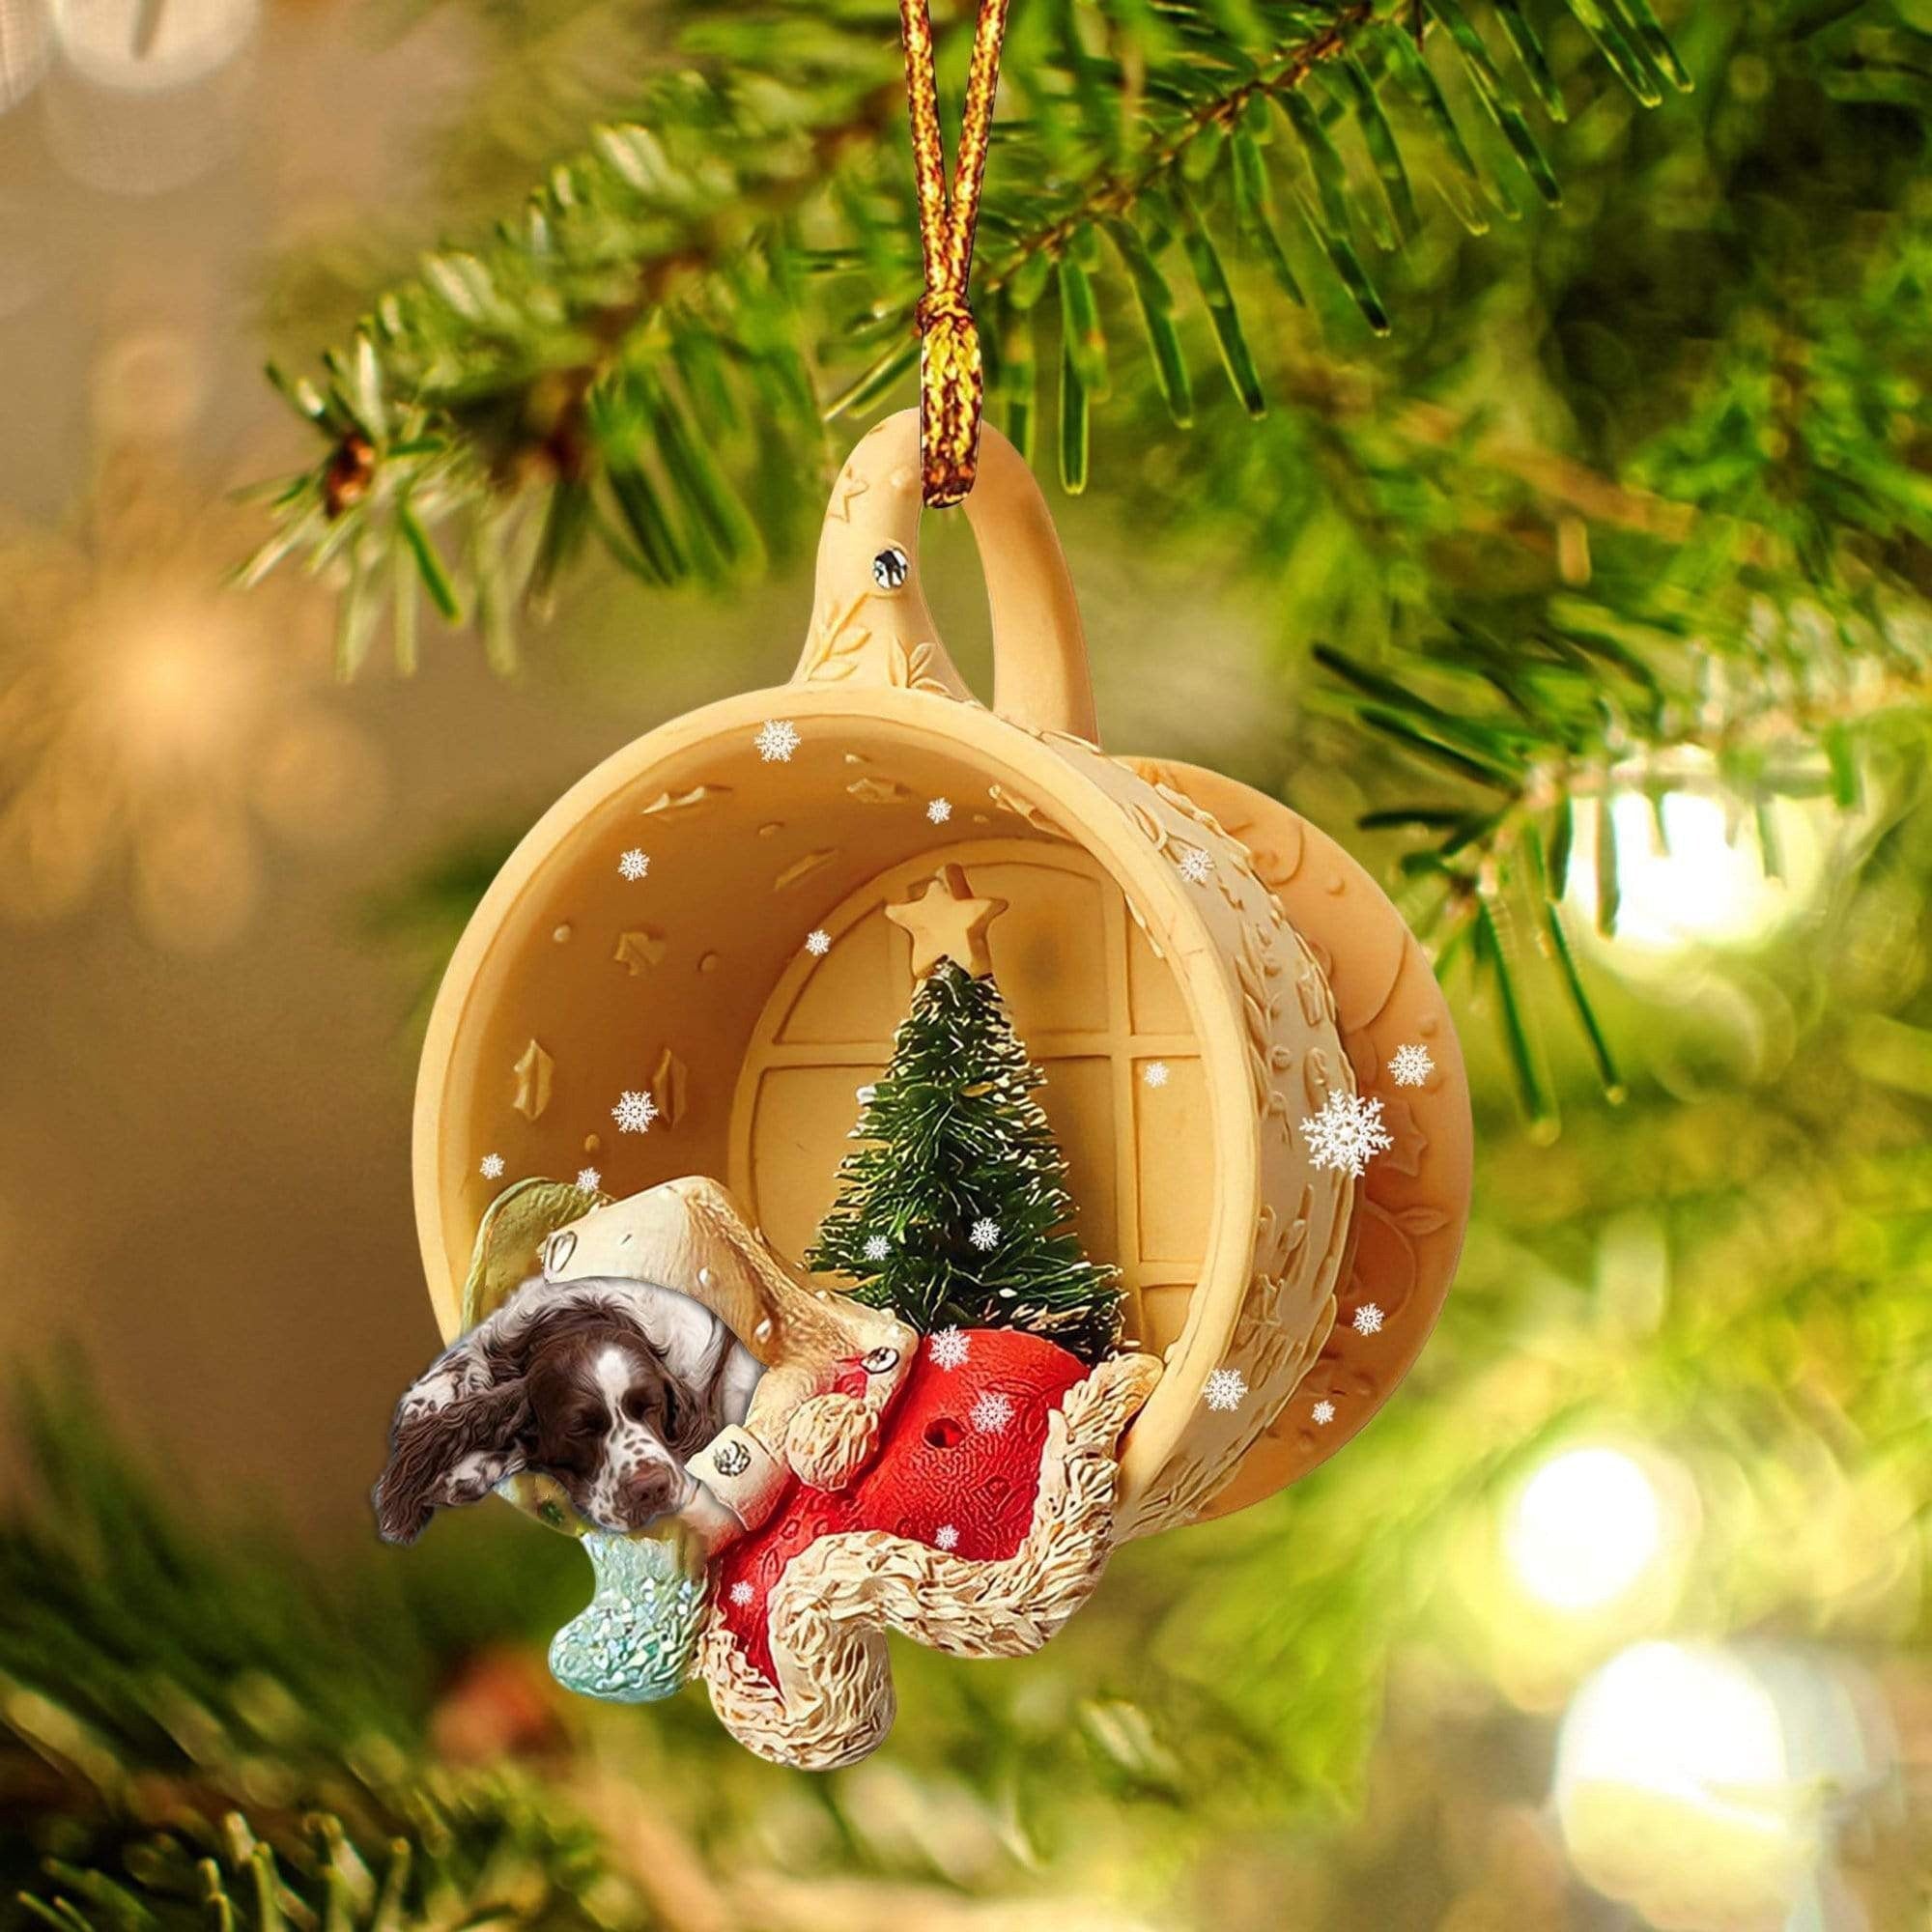 English Springer Spaniel Sleeping In A Cup Christmas Ornament/ Flat Acrylic Dog Christmas Ornament